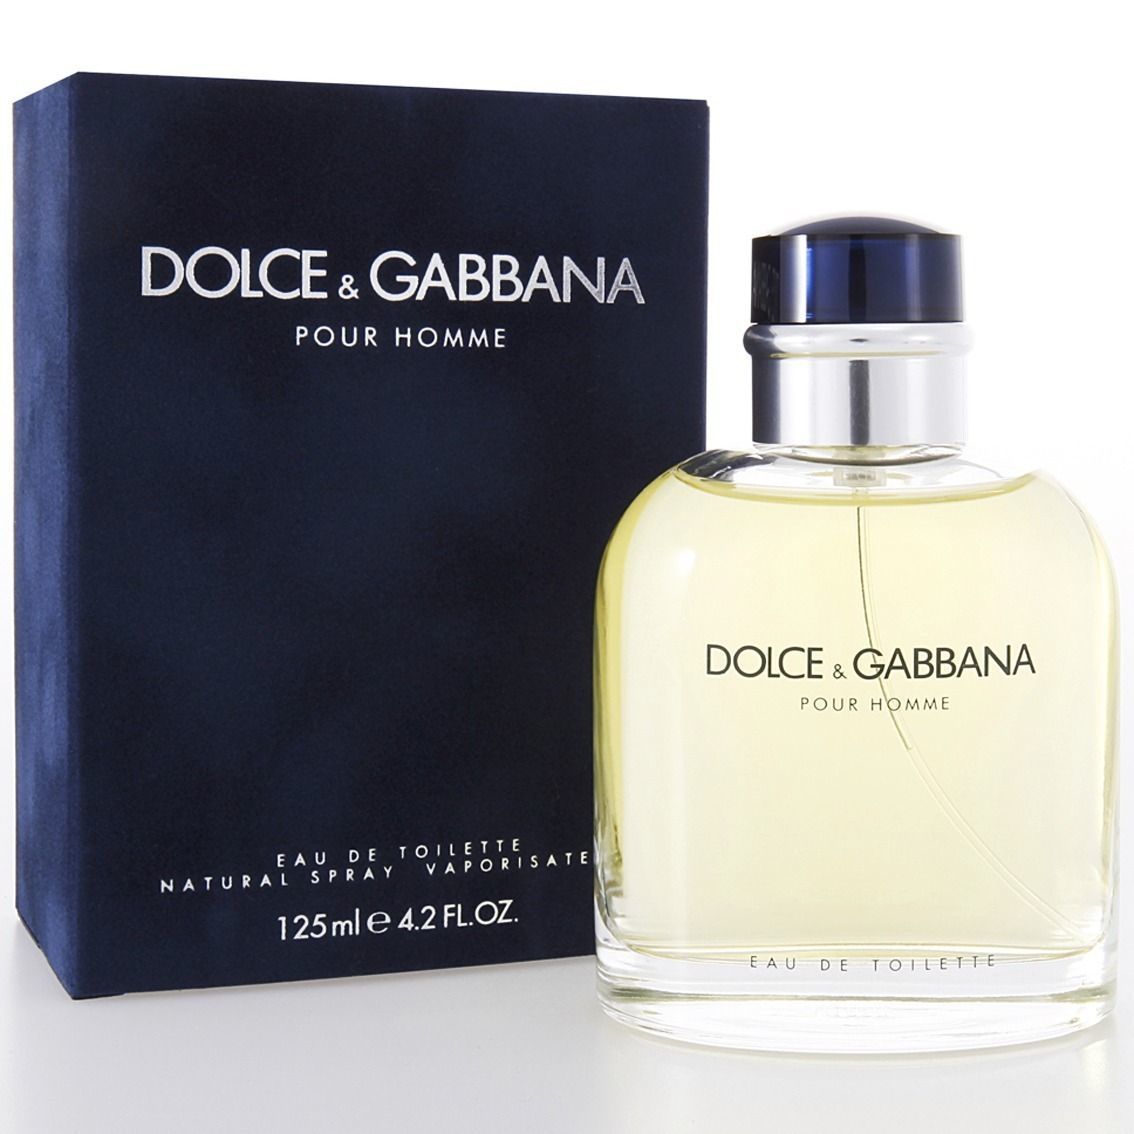 Дольче габбана для мужчин. Dolce&Gabbana men 125ml EDT. Dolce Gabbana pour homme. Dolce Gabbana pour homme 75 мл. Дольче Габбана pour homme мужской.